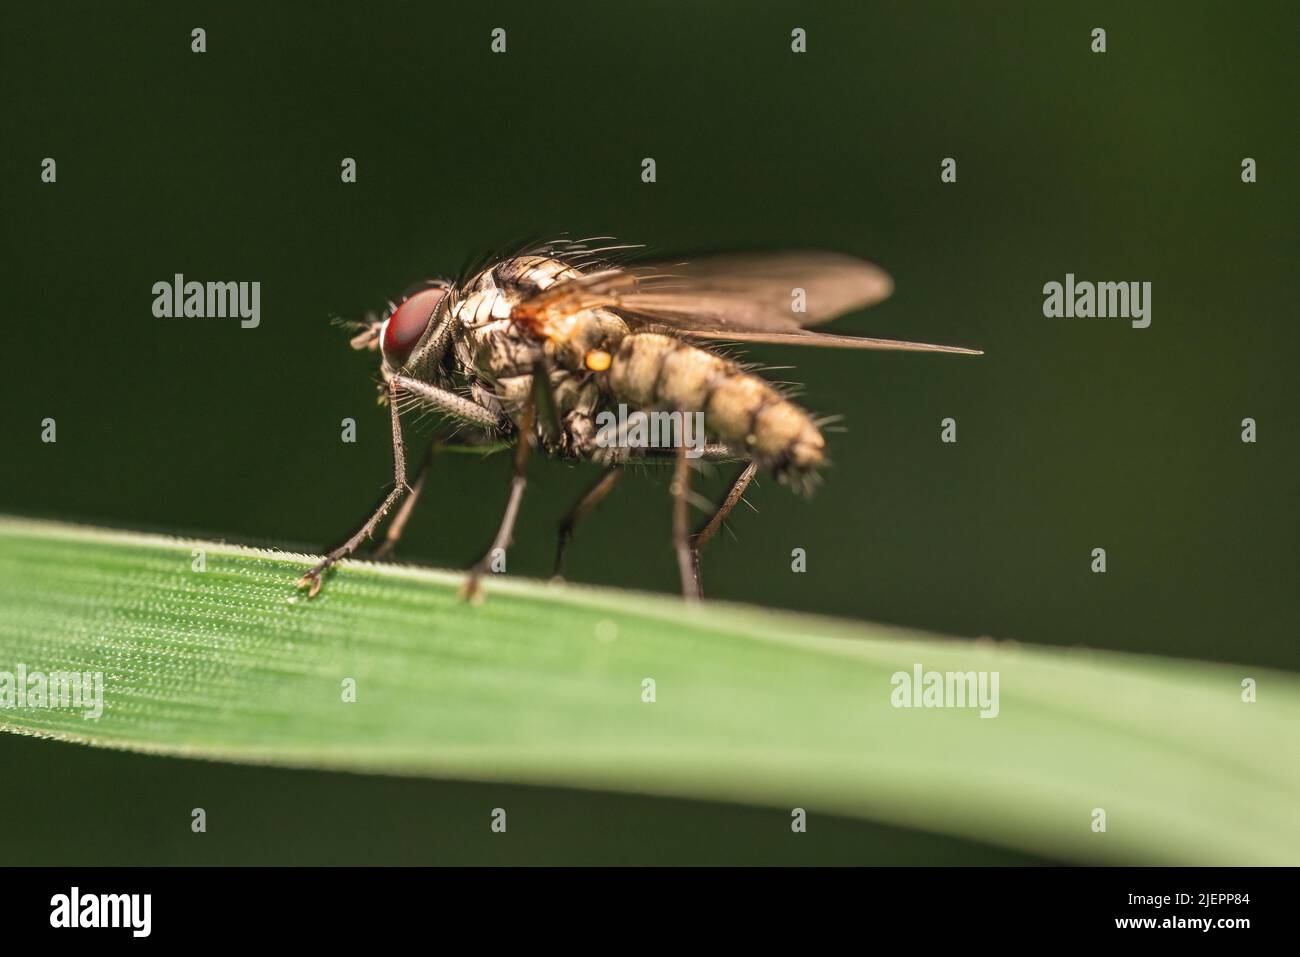 Macro shot of a Hylemya - A genus of root maggot flies - sitting on a green grass leaf Stock Photo